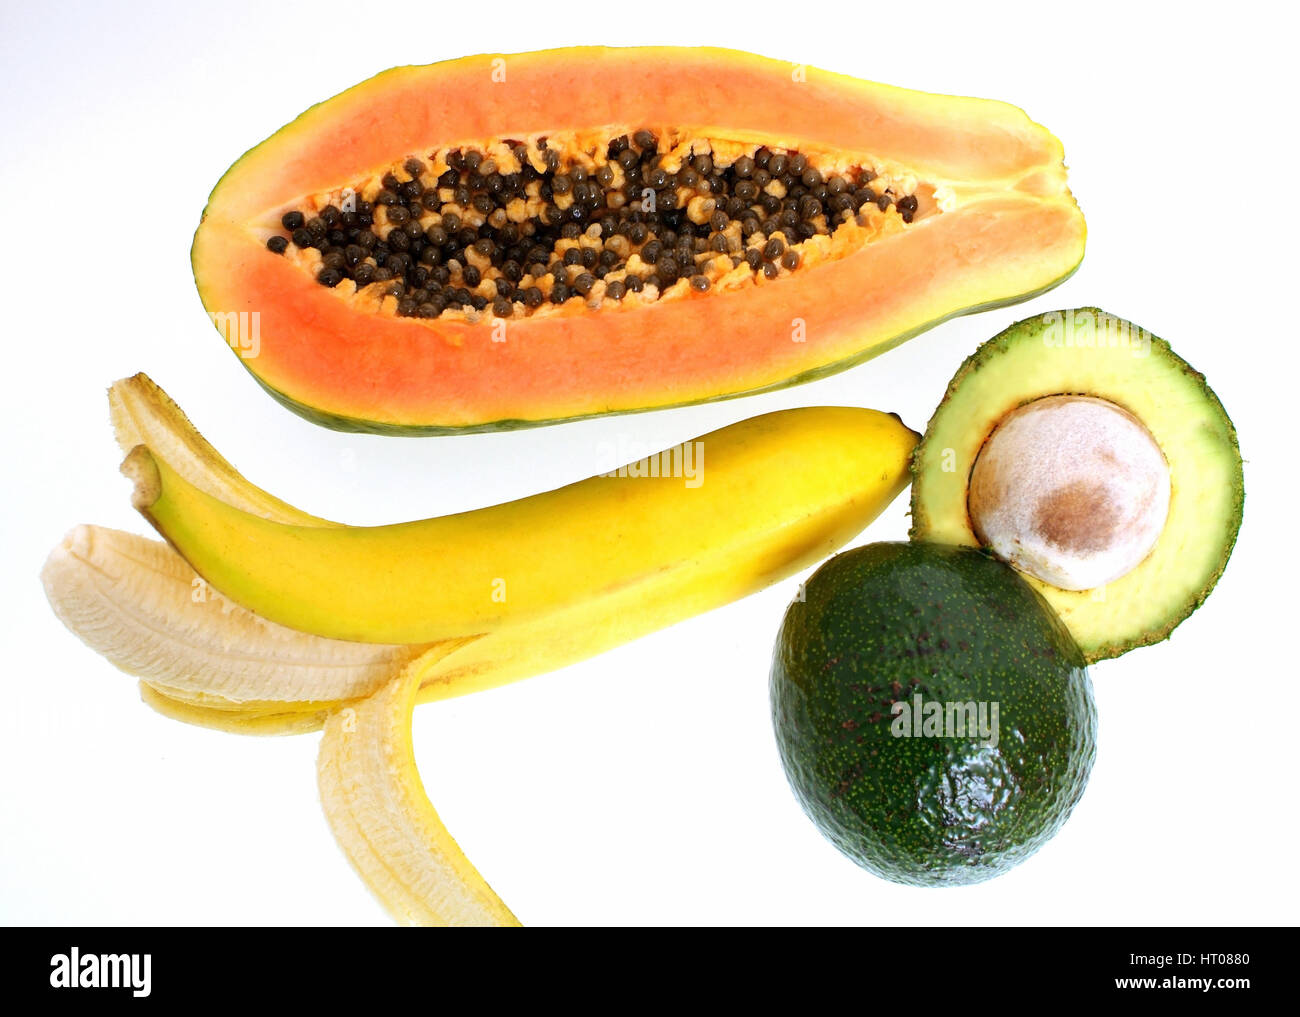 Papaya, Banane und Avocado - papaya, banana and avocado Stock Photo